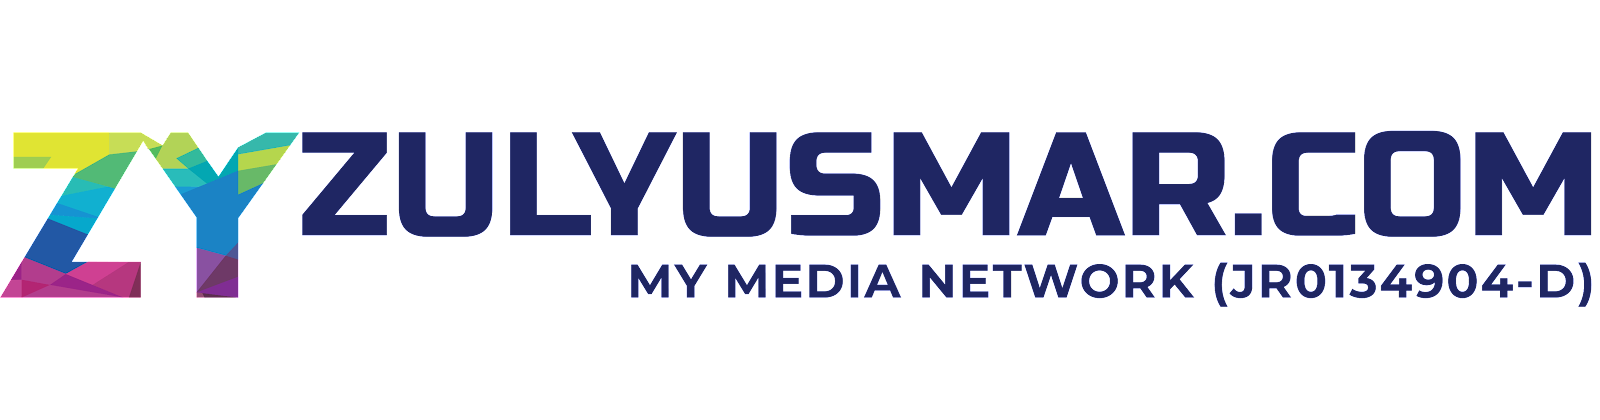 ZulYusmar.com - Top 40 Malaysia Lifestyle, Technology, F&B, Travel & Business Online Portal